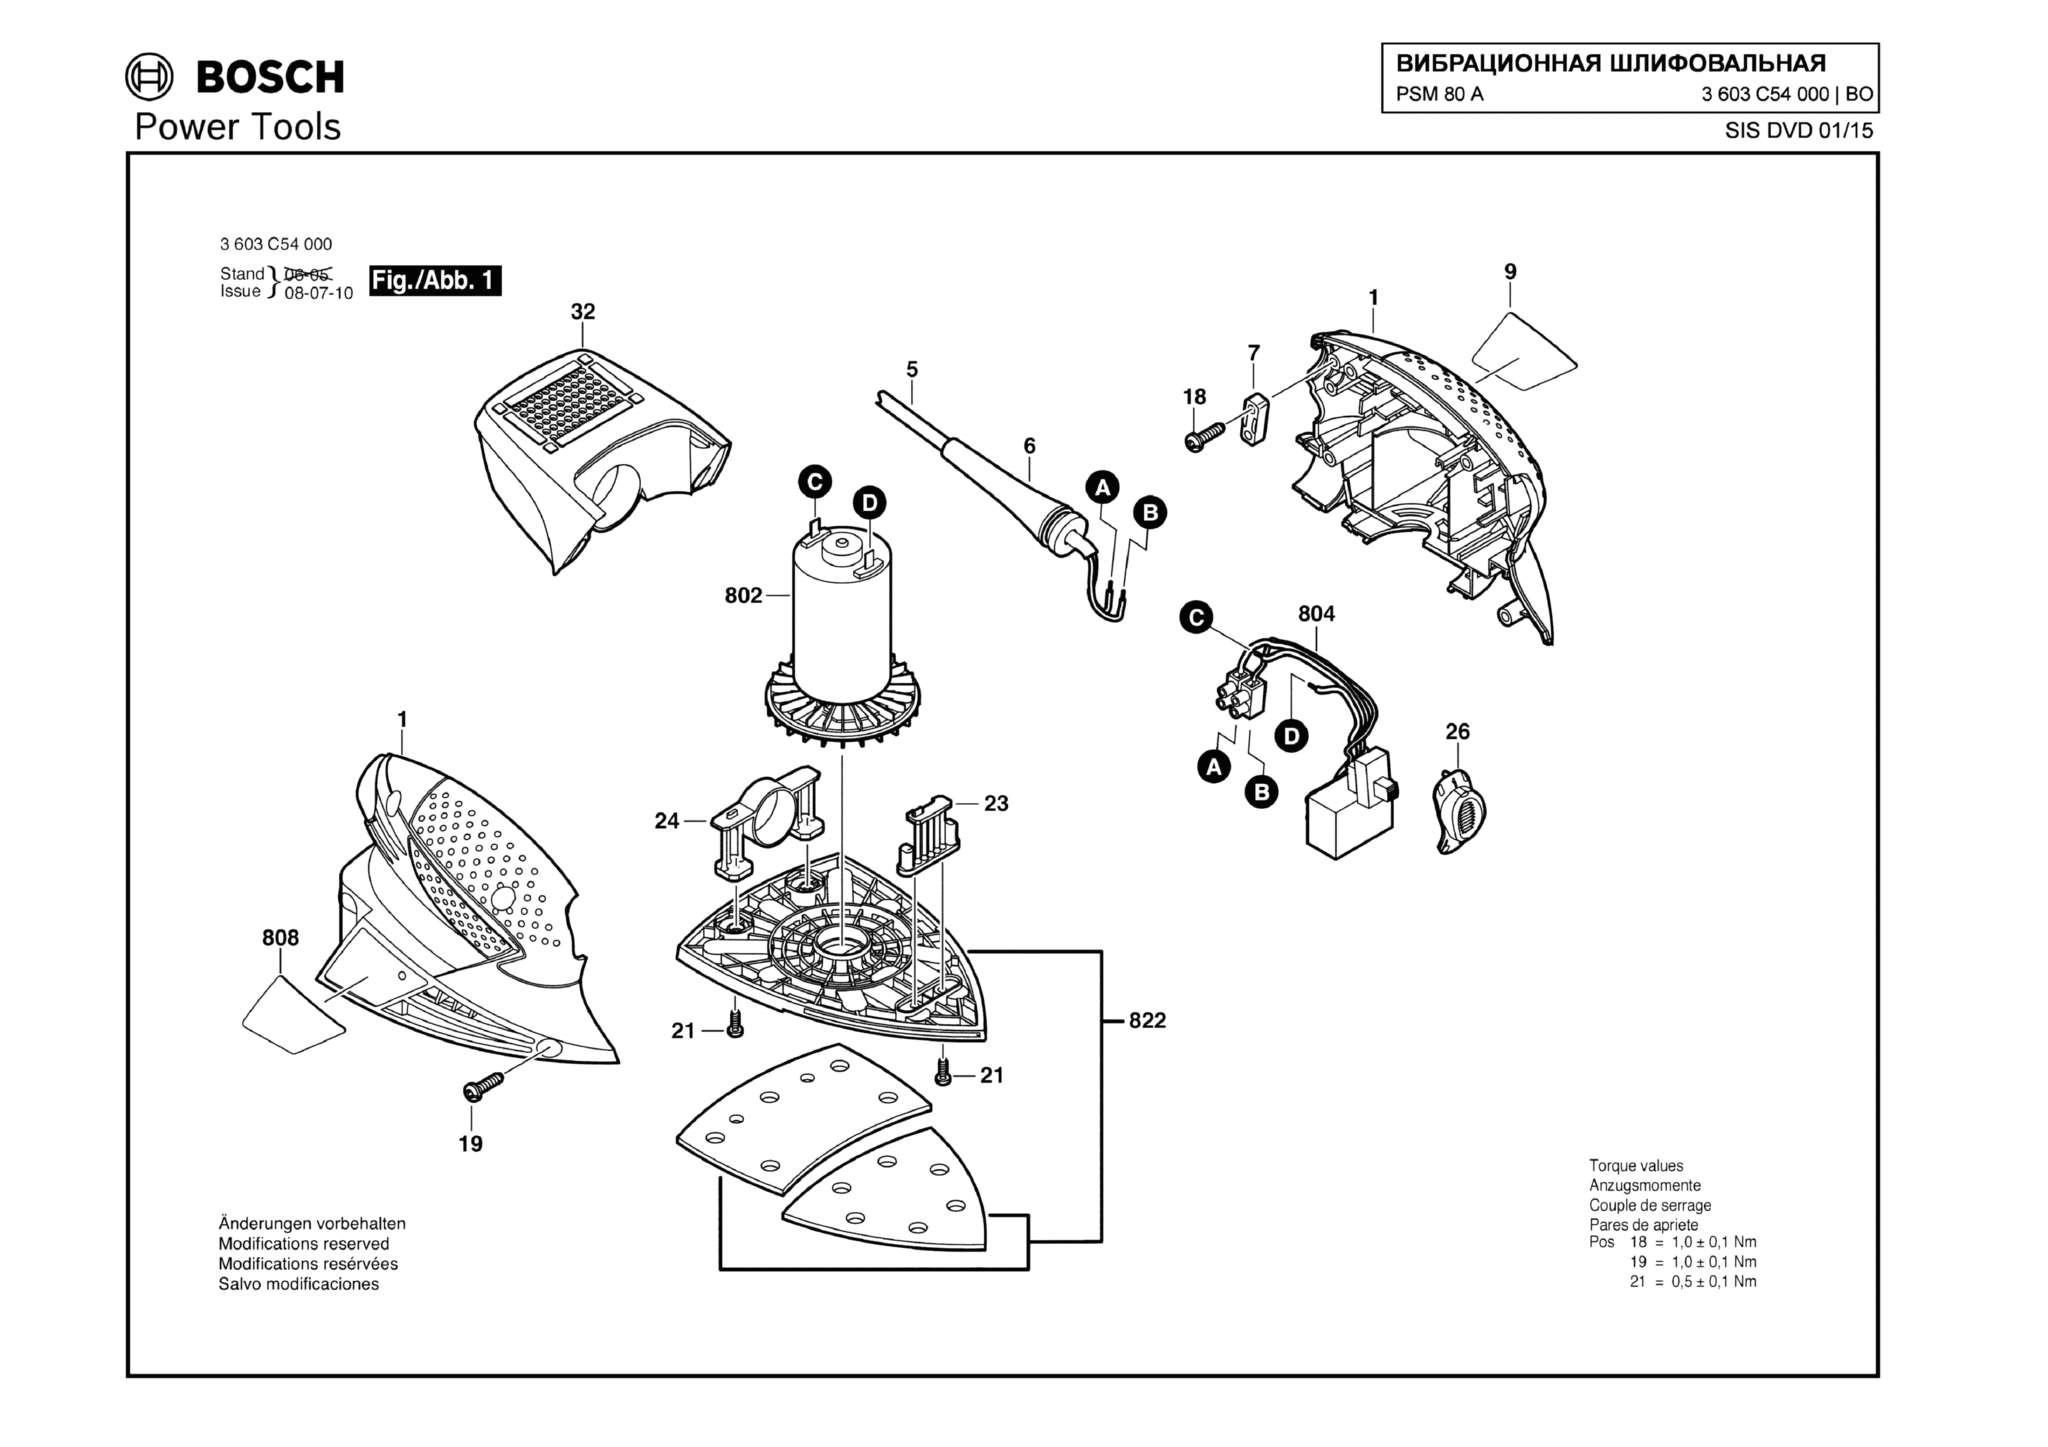 Запчасти, схема и деталировка Bosch PSM 80 A (ТИП 3603C54000)